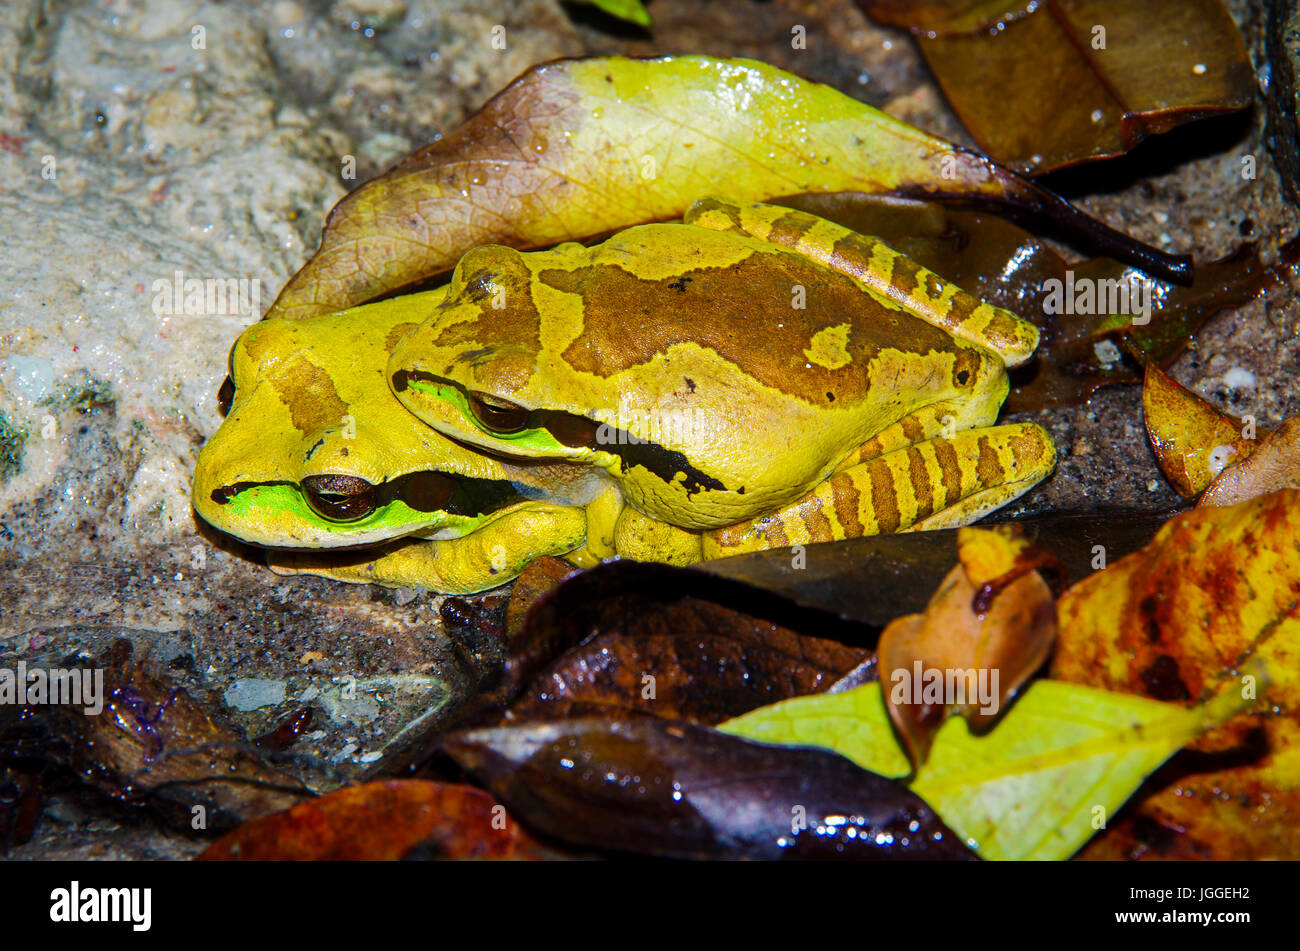 Masked Tree Frogs maiting image taken in Panama Stock Photo